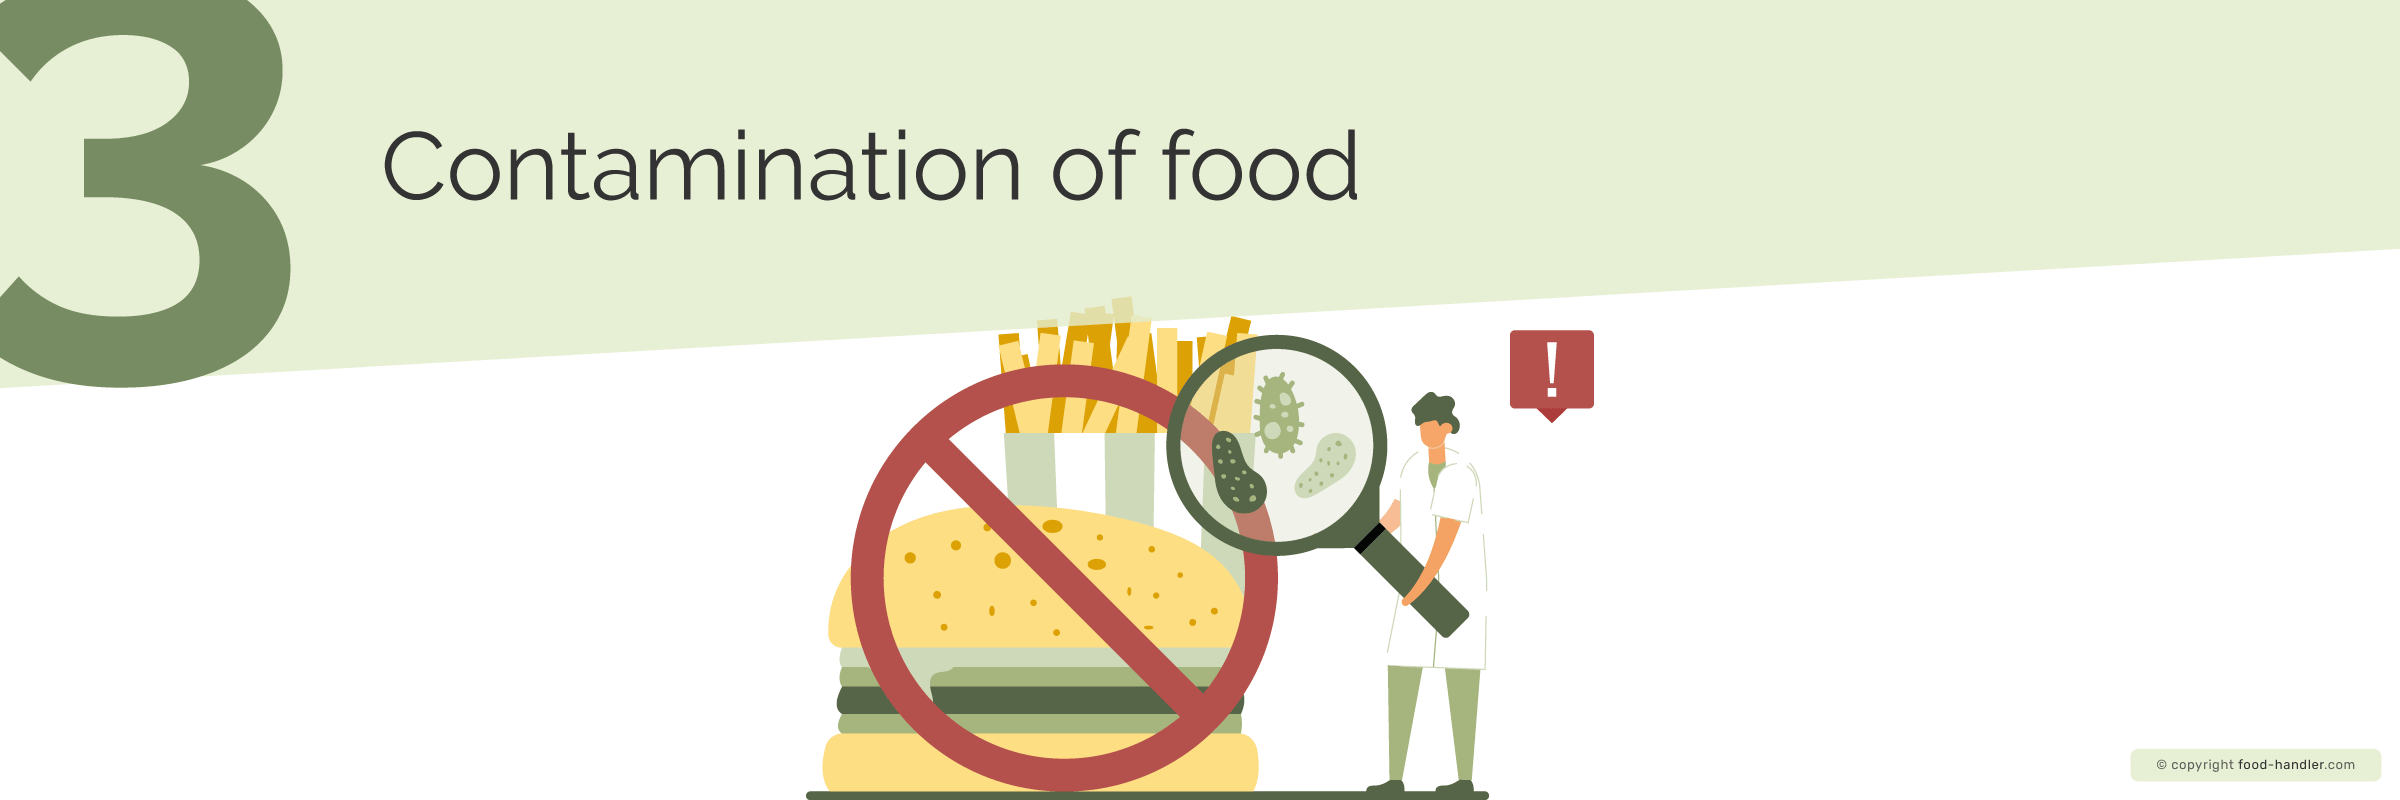 Contamination of food